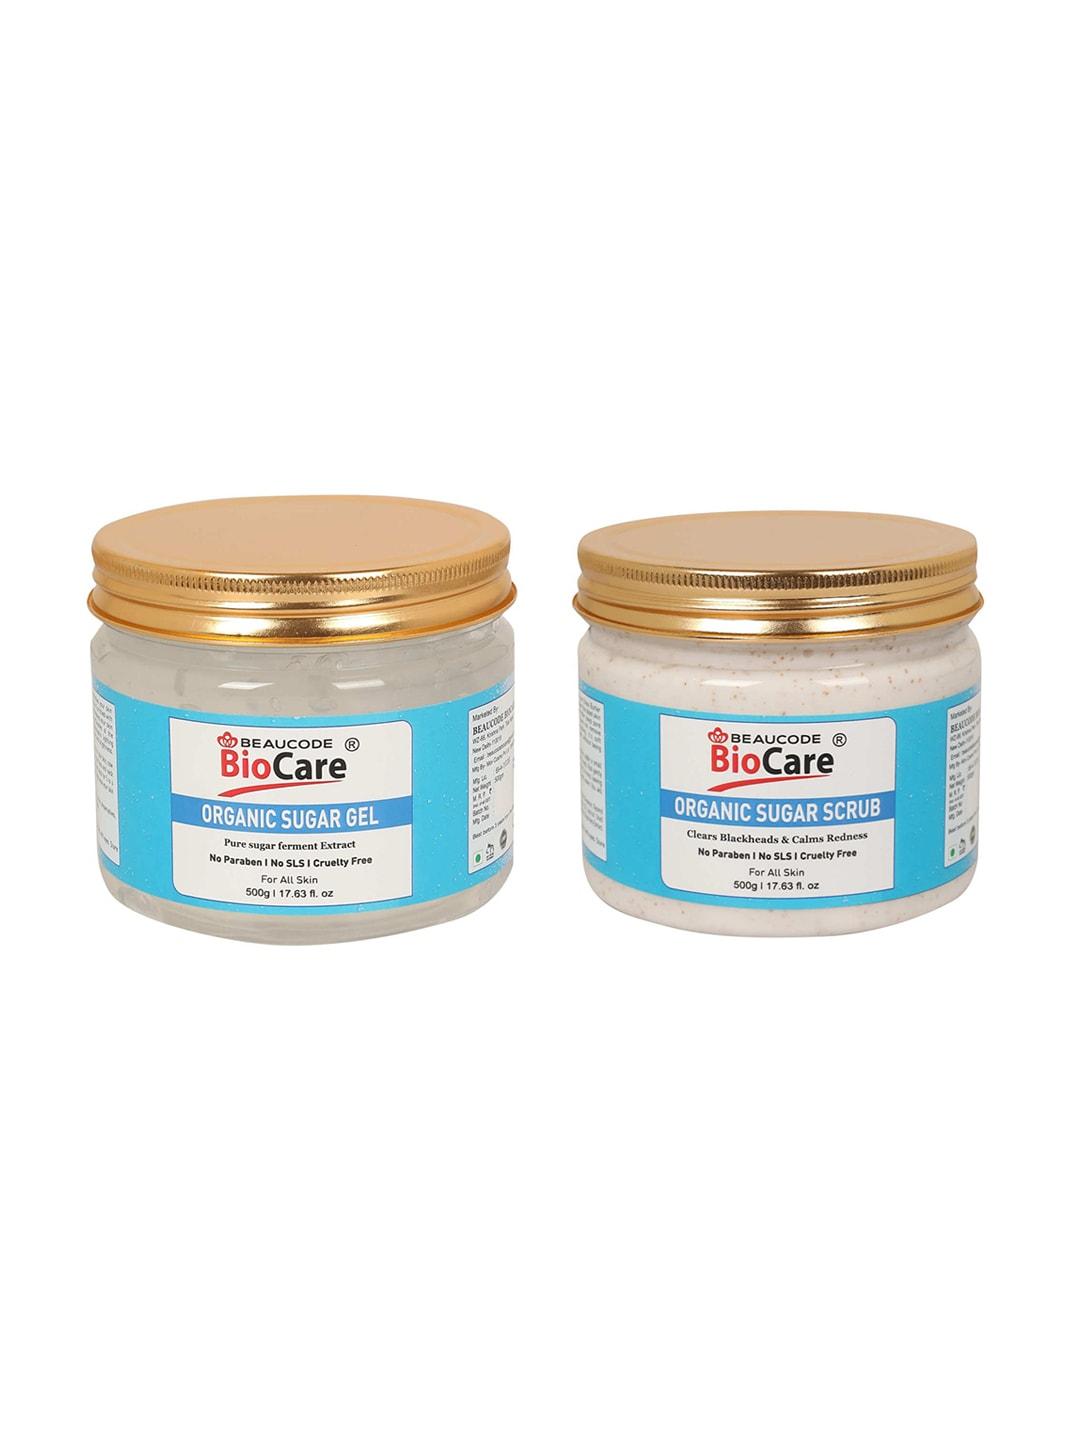 beaucode biocare white set of 2 organic sugar gel & scrub - 500 g each